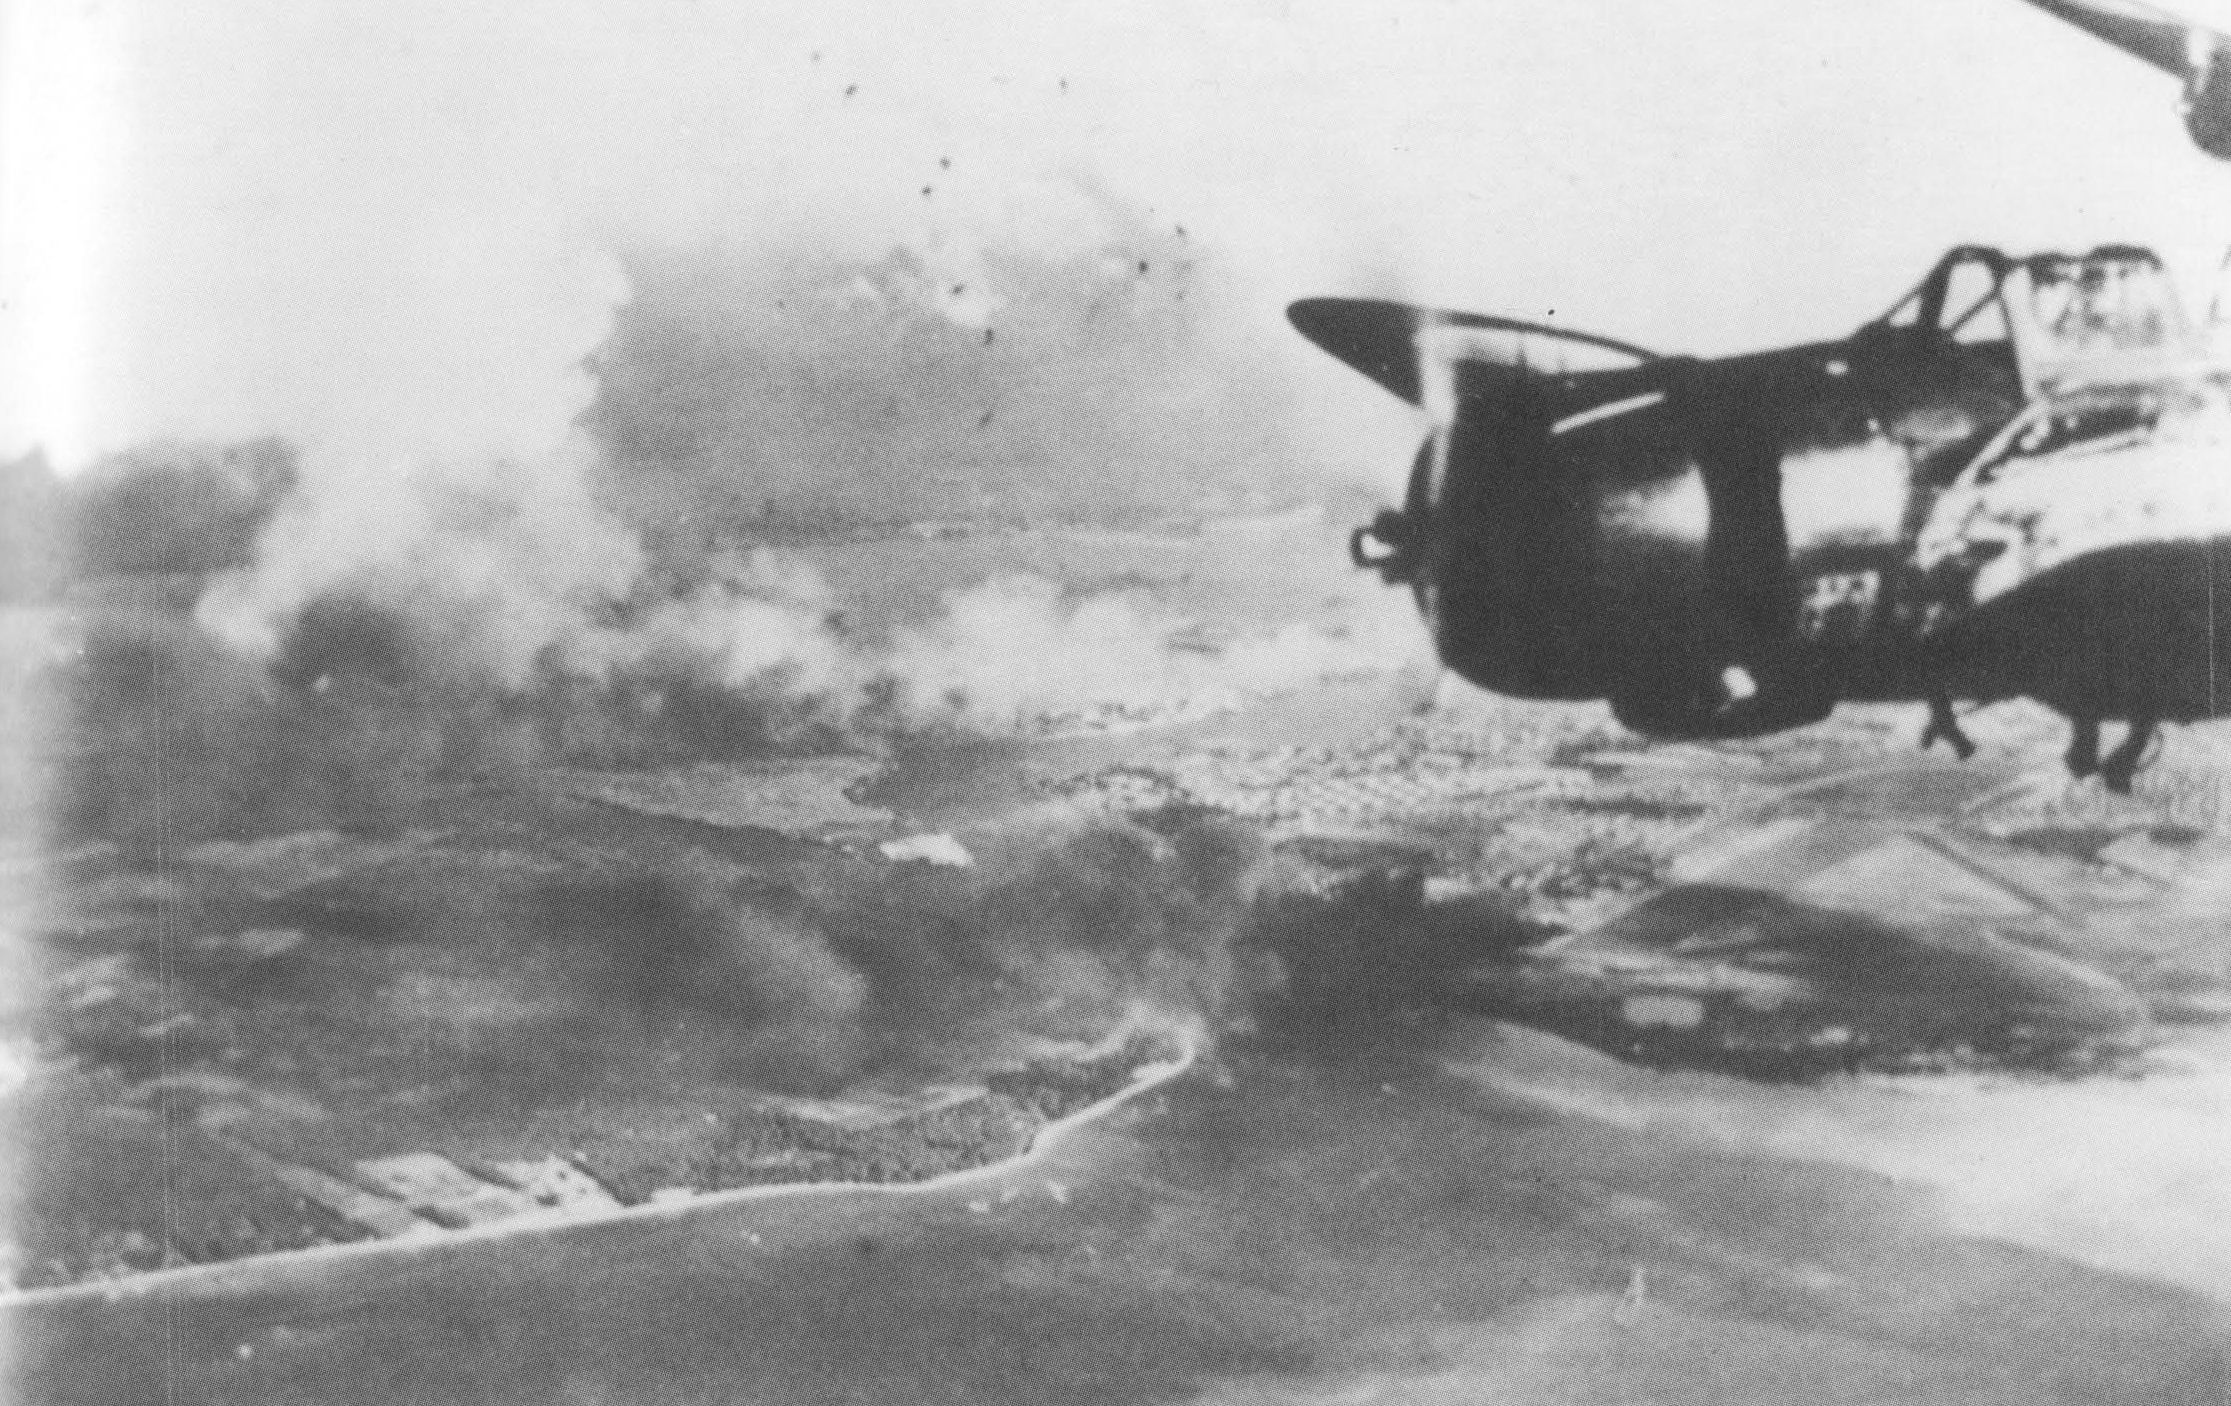 B5N torpedo bombers of carrier Kaga in flight over US Territory of Hawaii, 7 Dec 1941